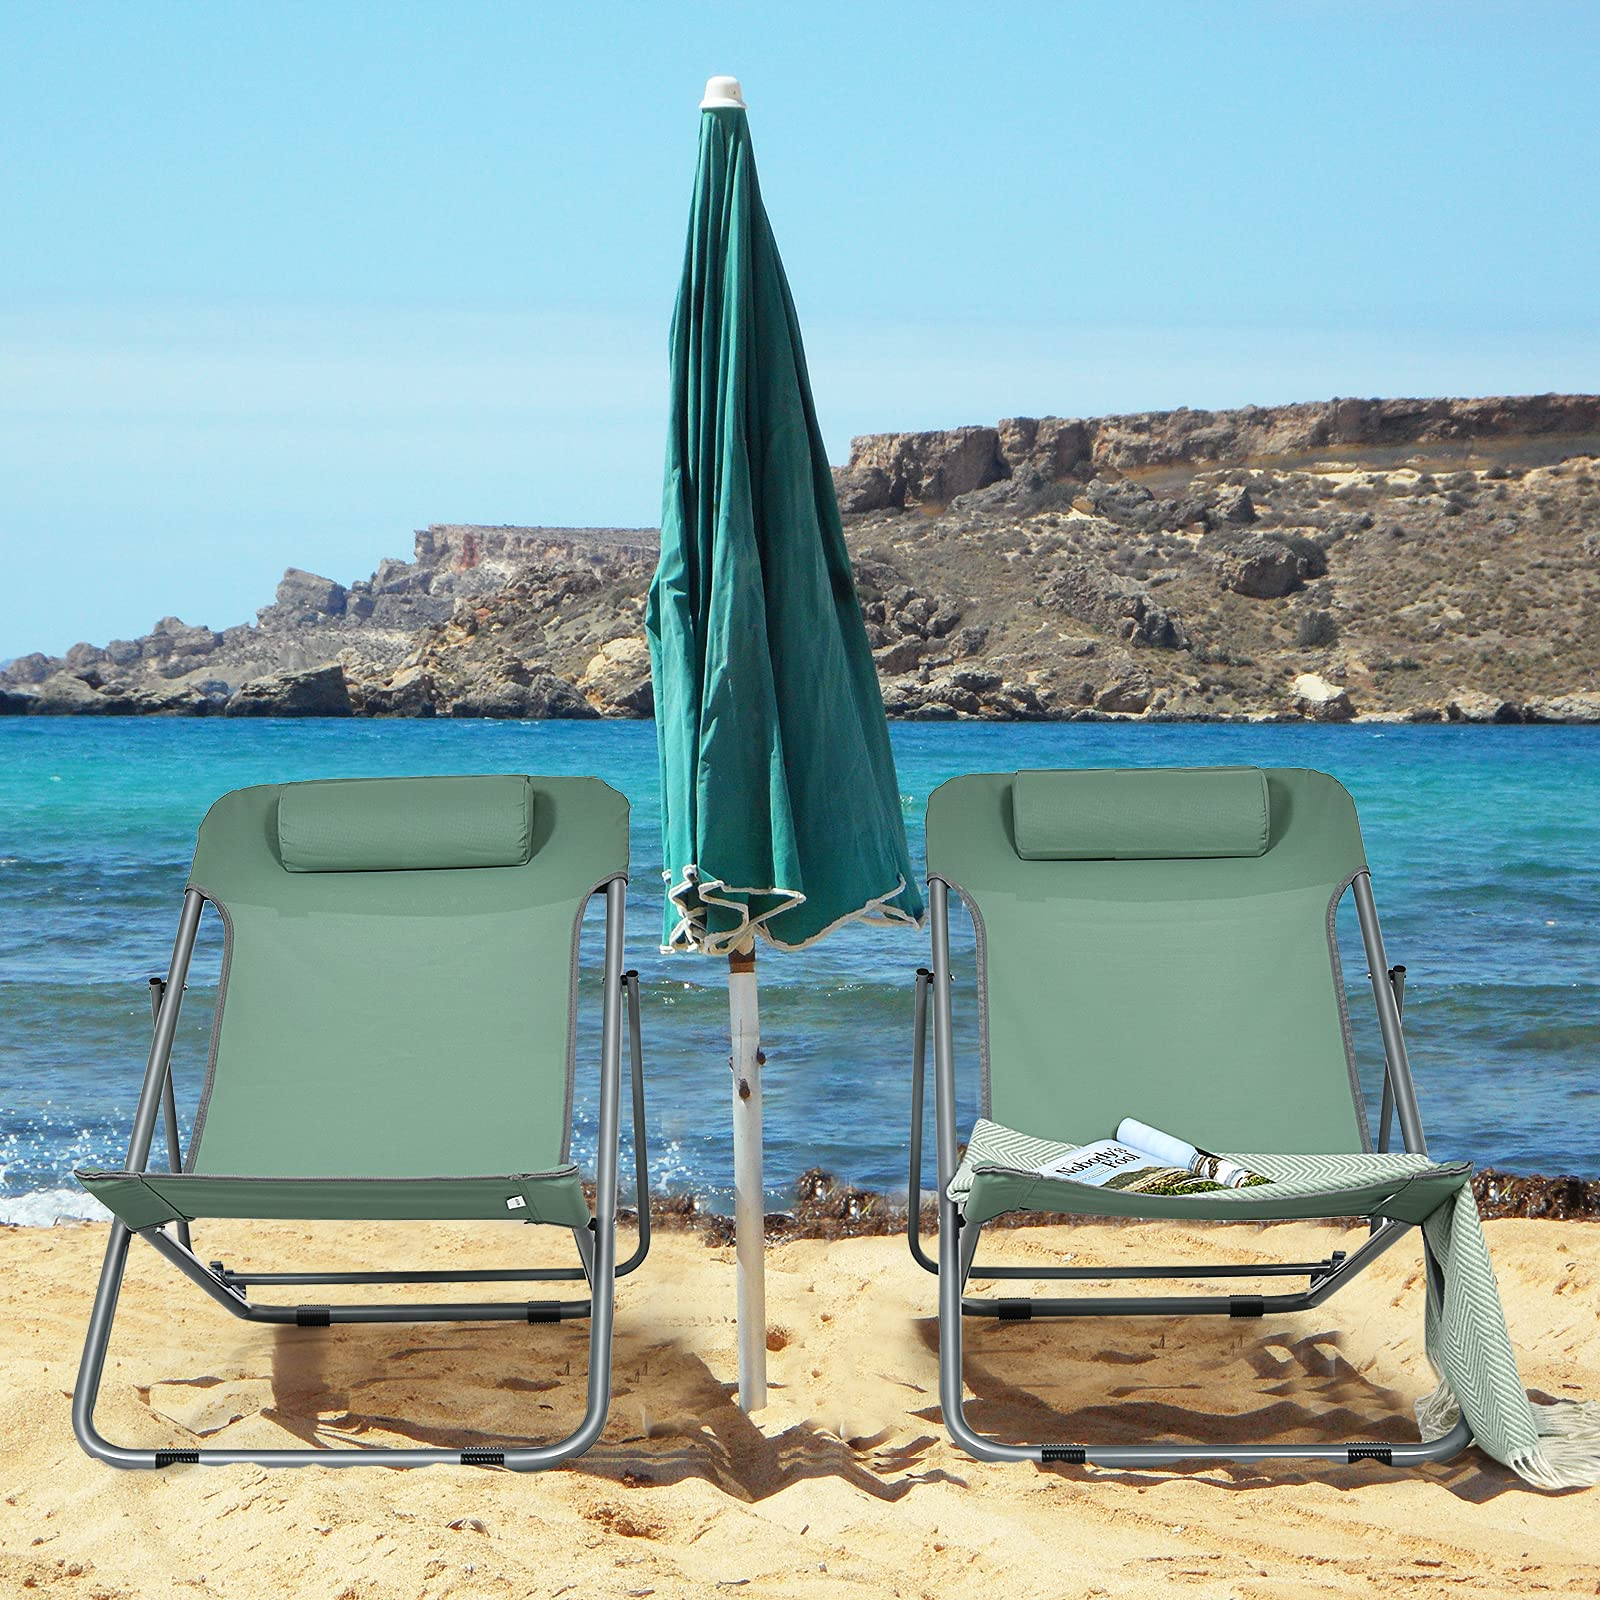 Giantex Beach Chair for Adults Camping Chair Set (4, Green)